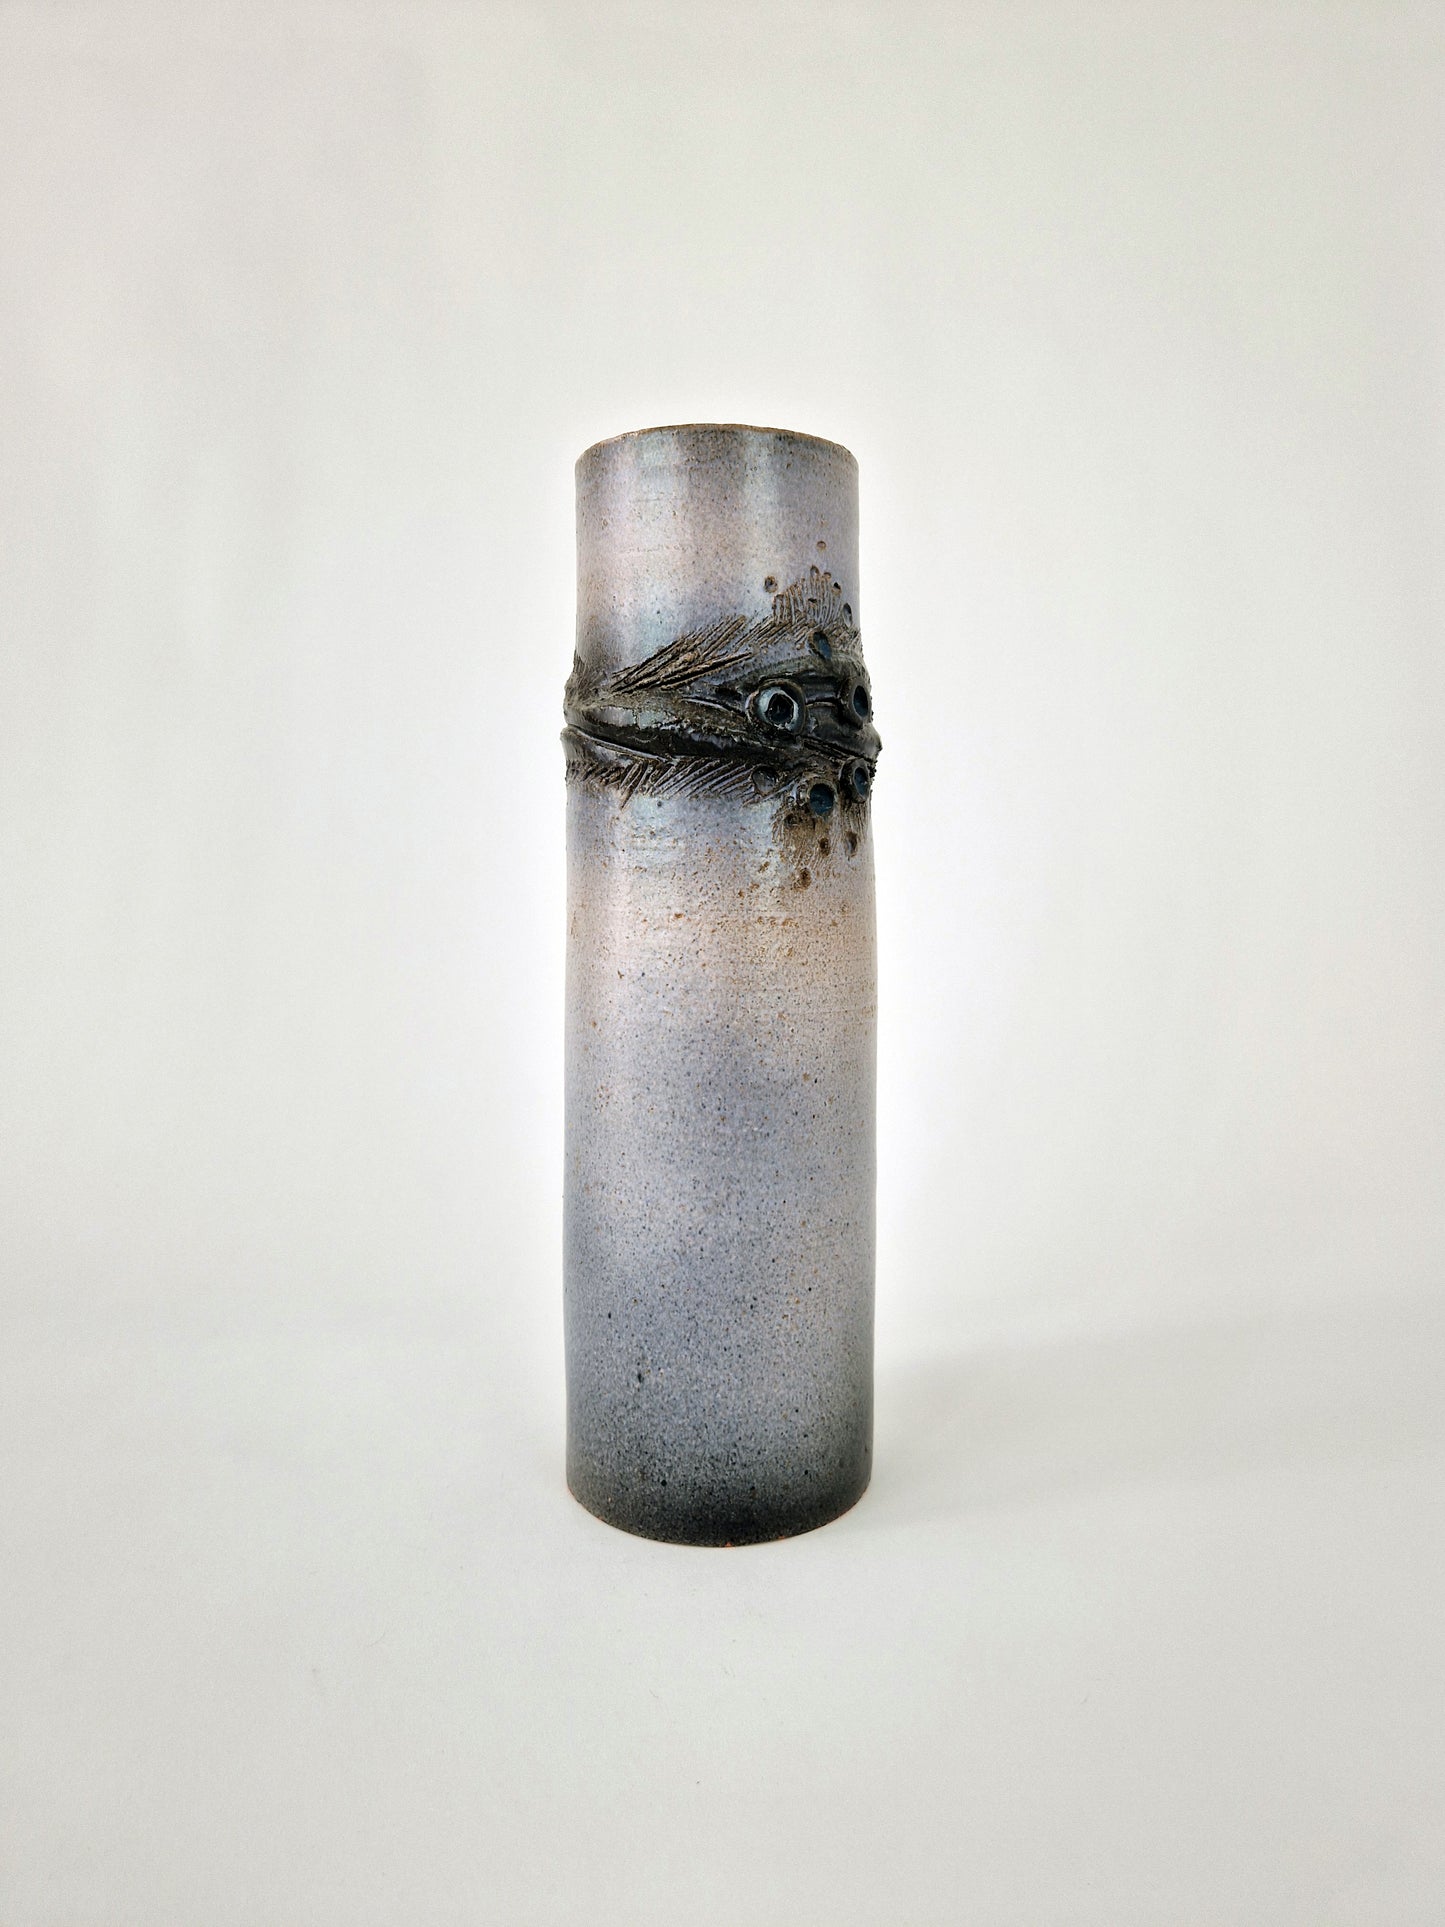 Elisabeth Vandeweghe - Vase rouleau en céramique